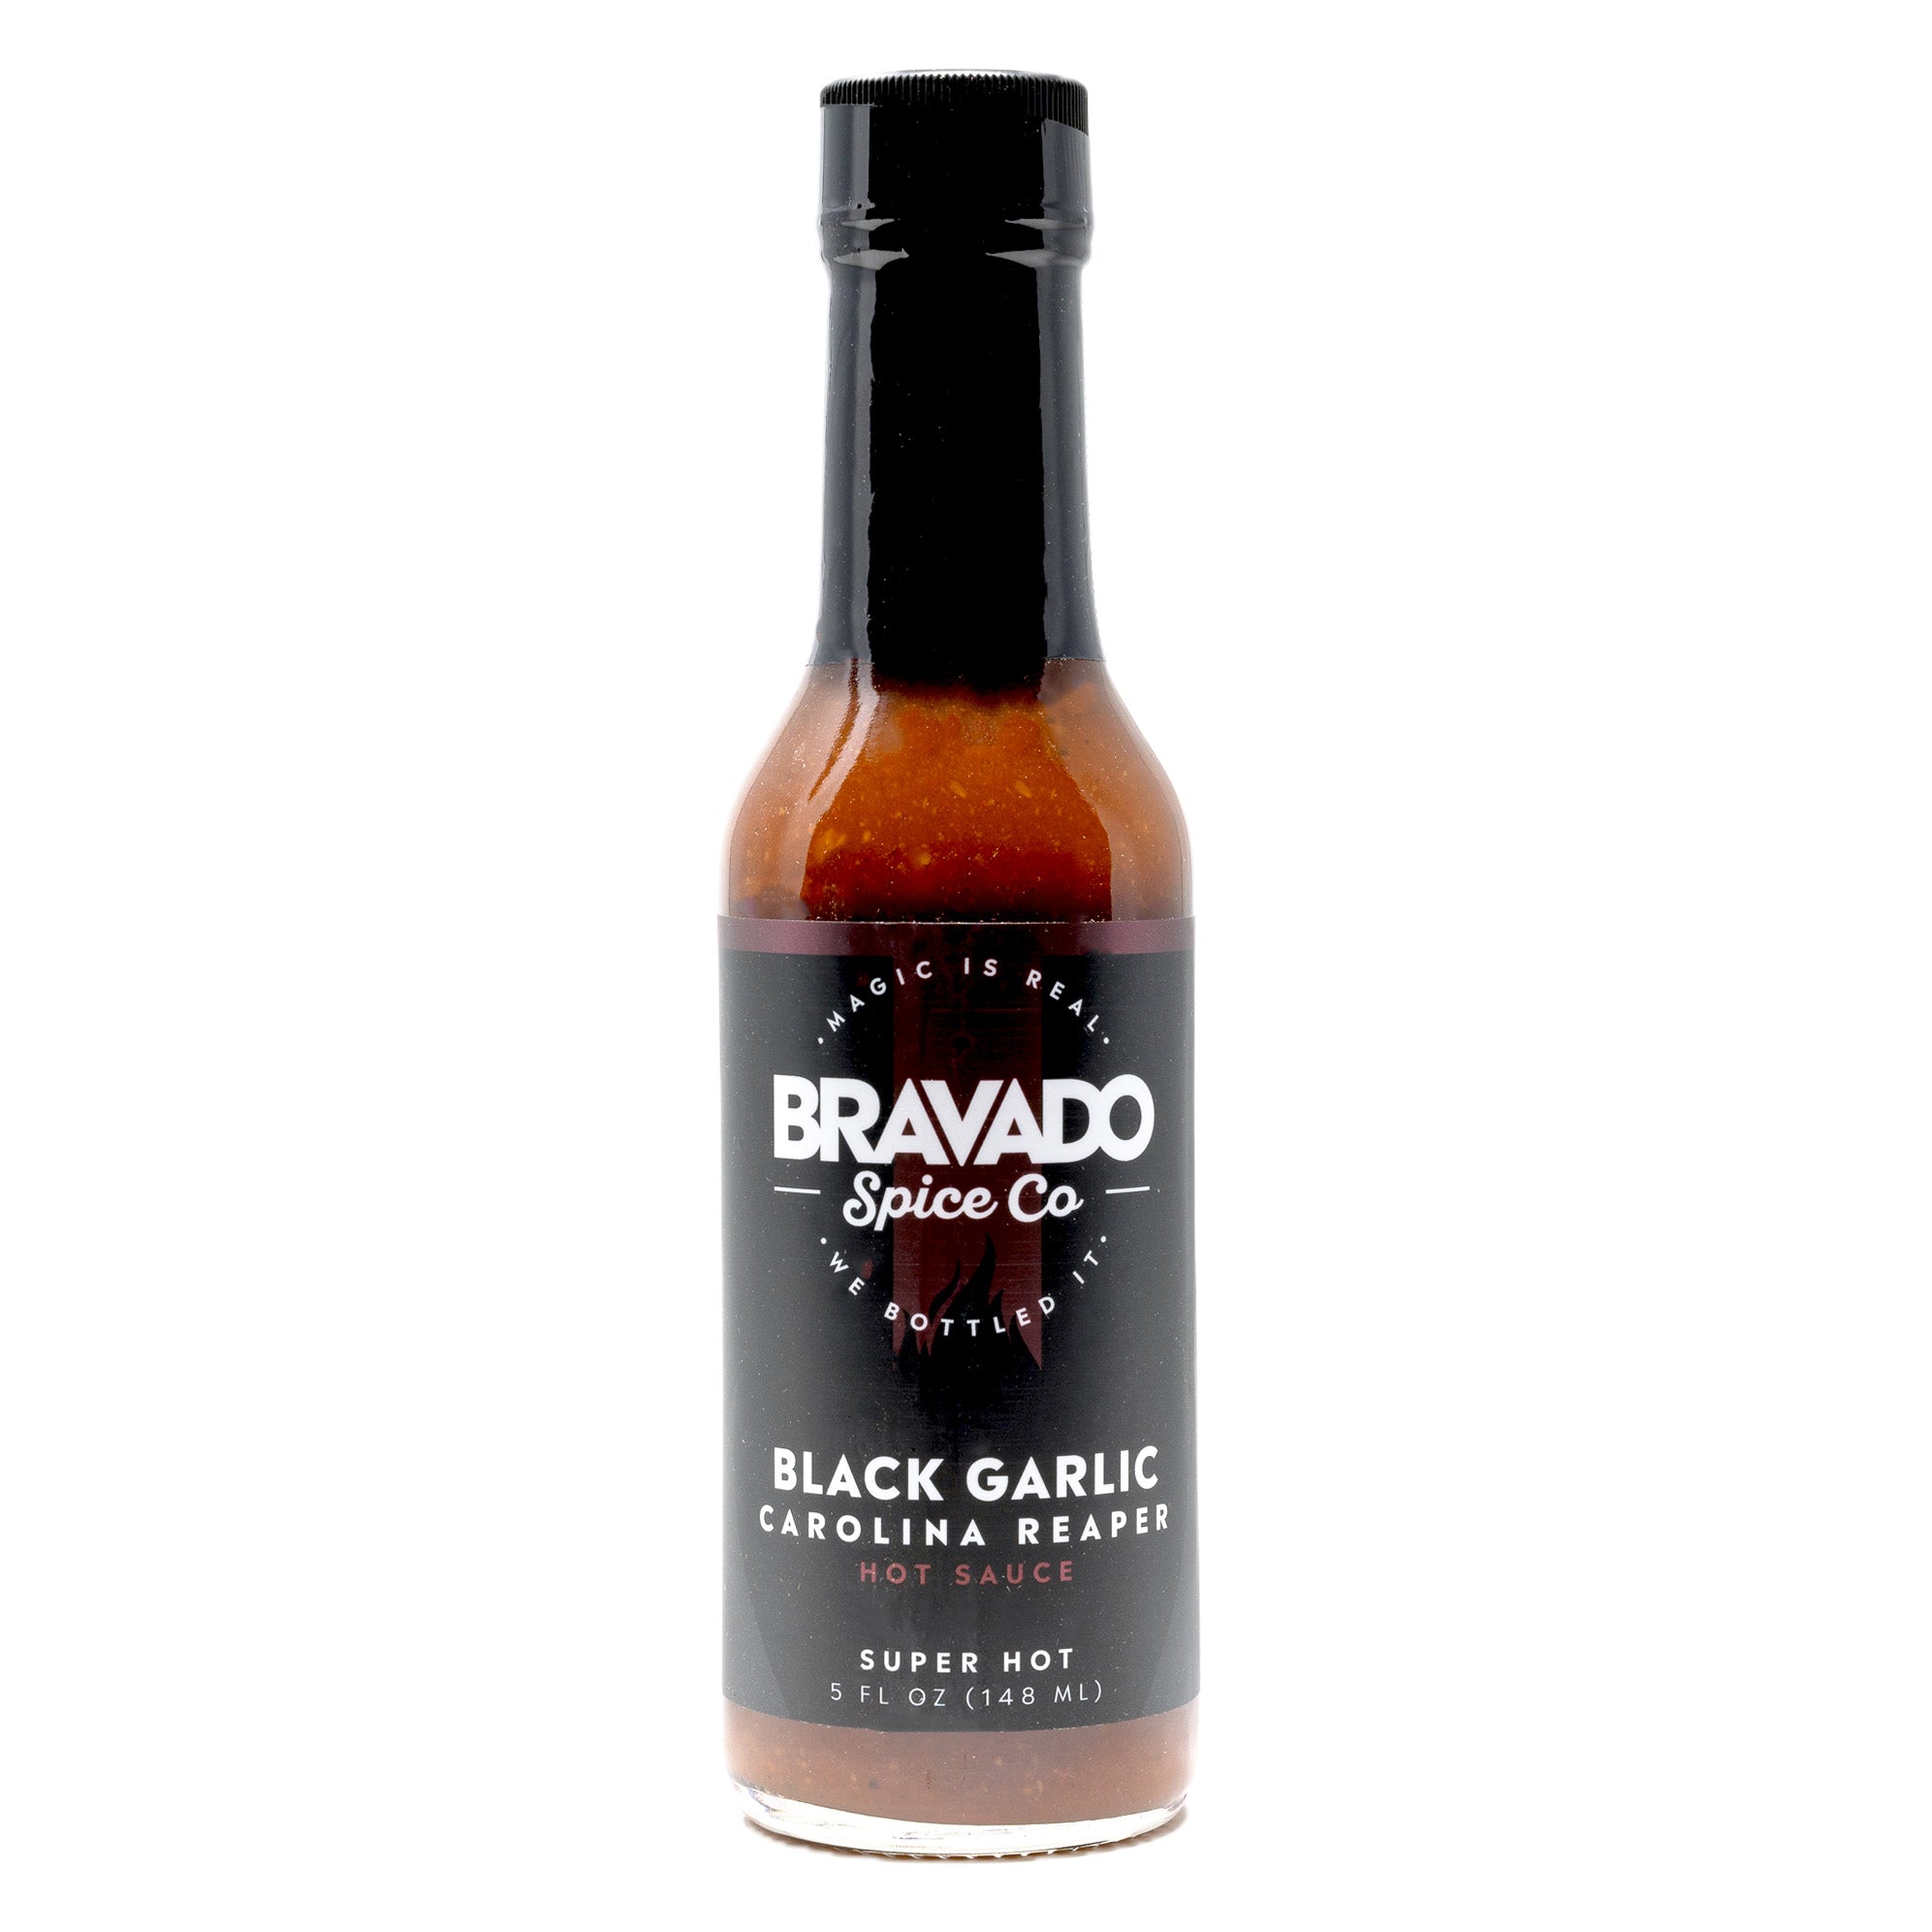 Bravado Black Garlic Carolina Reaper Hot Sauce